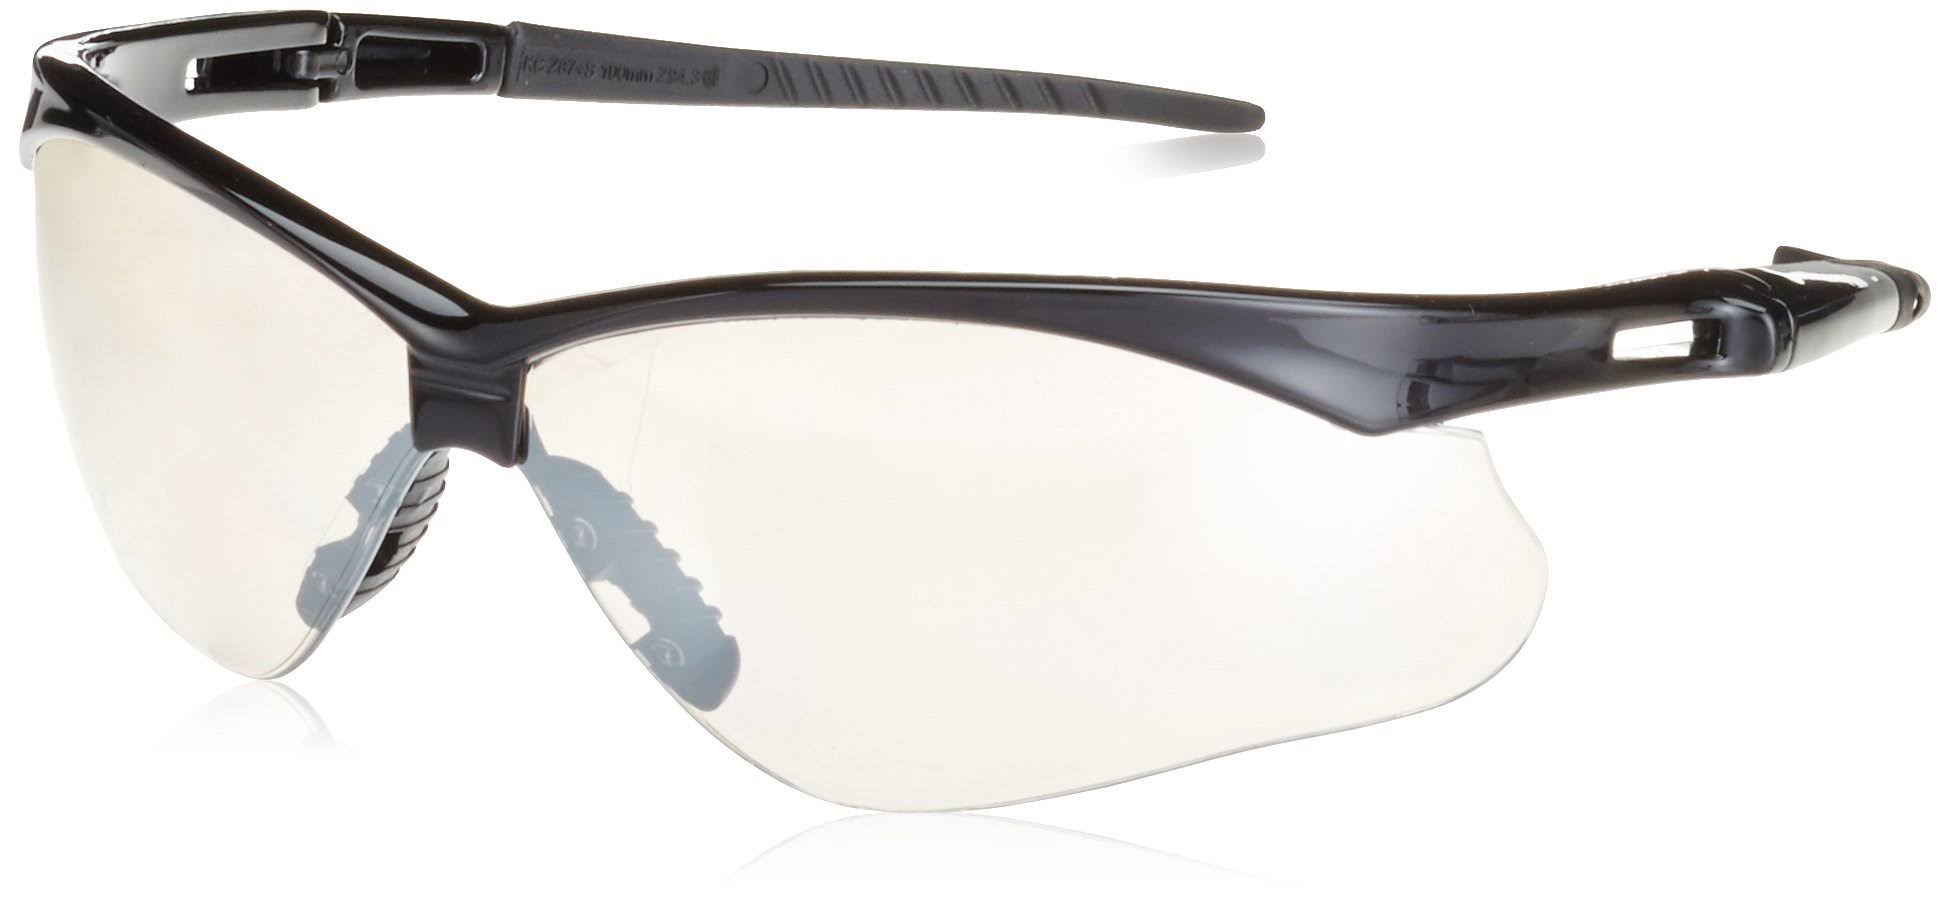 Jackson Indoor/Outdoor Safety Glasses - Scratch Resistant, Wraparound